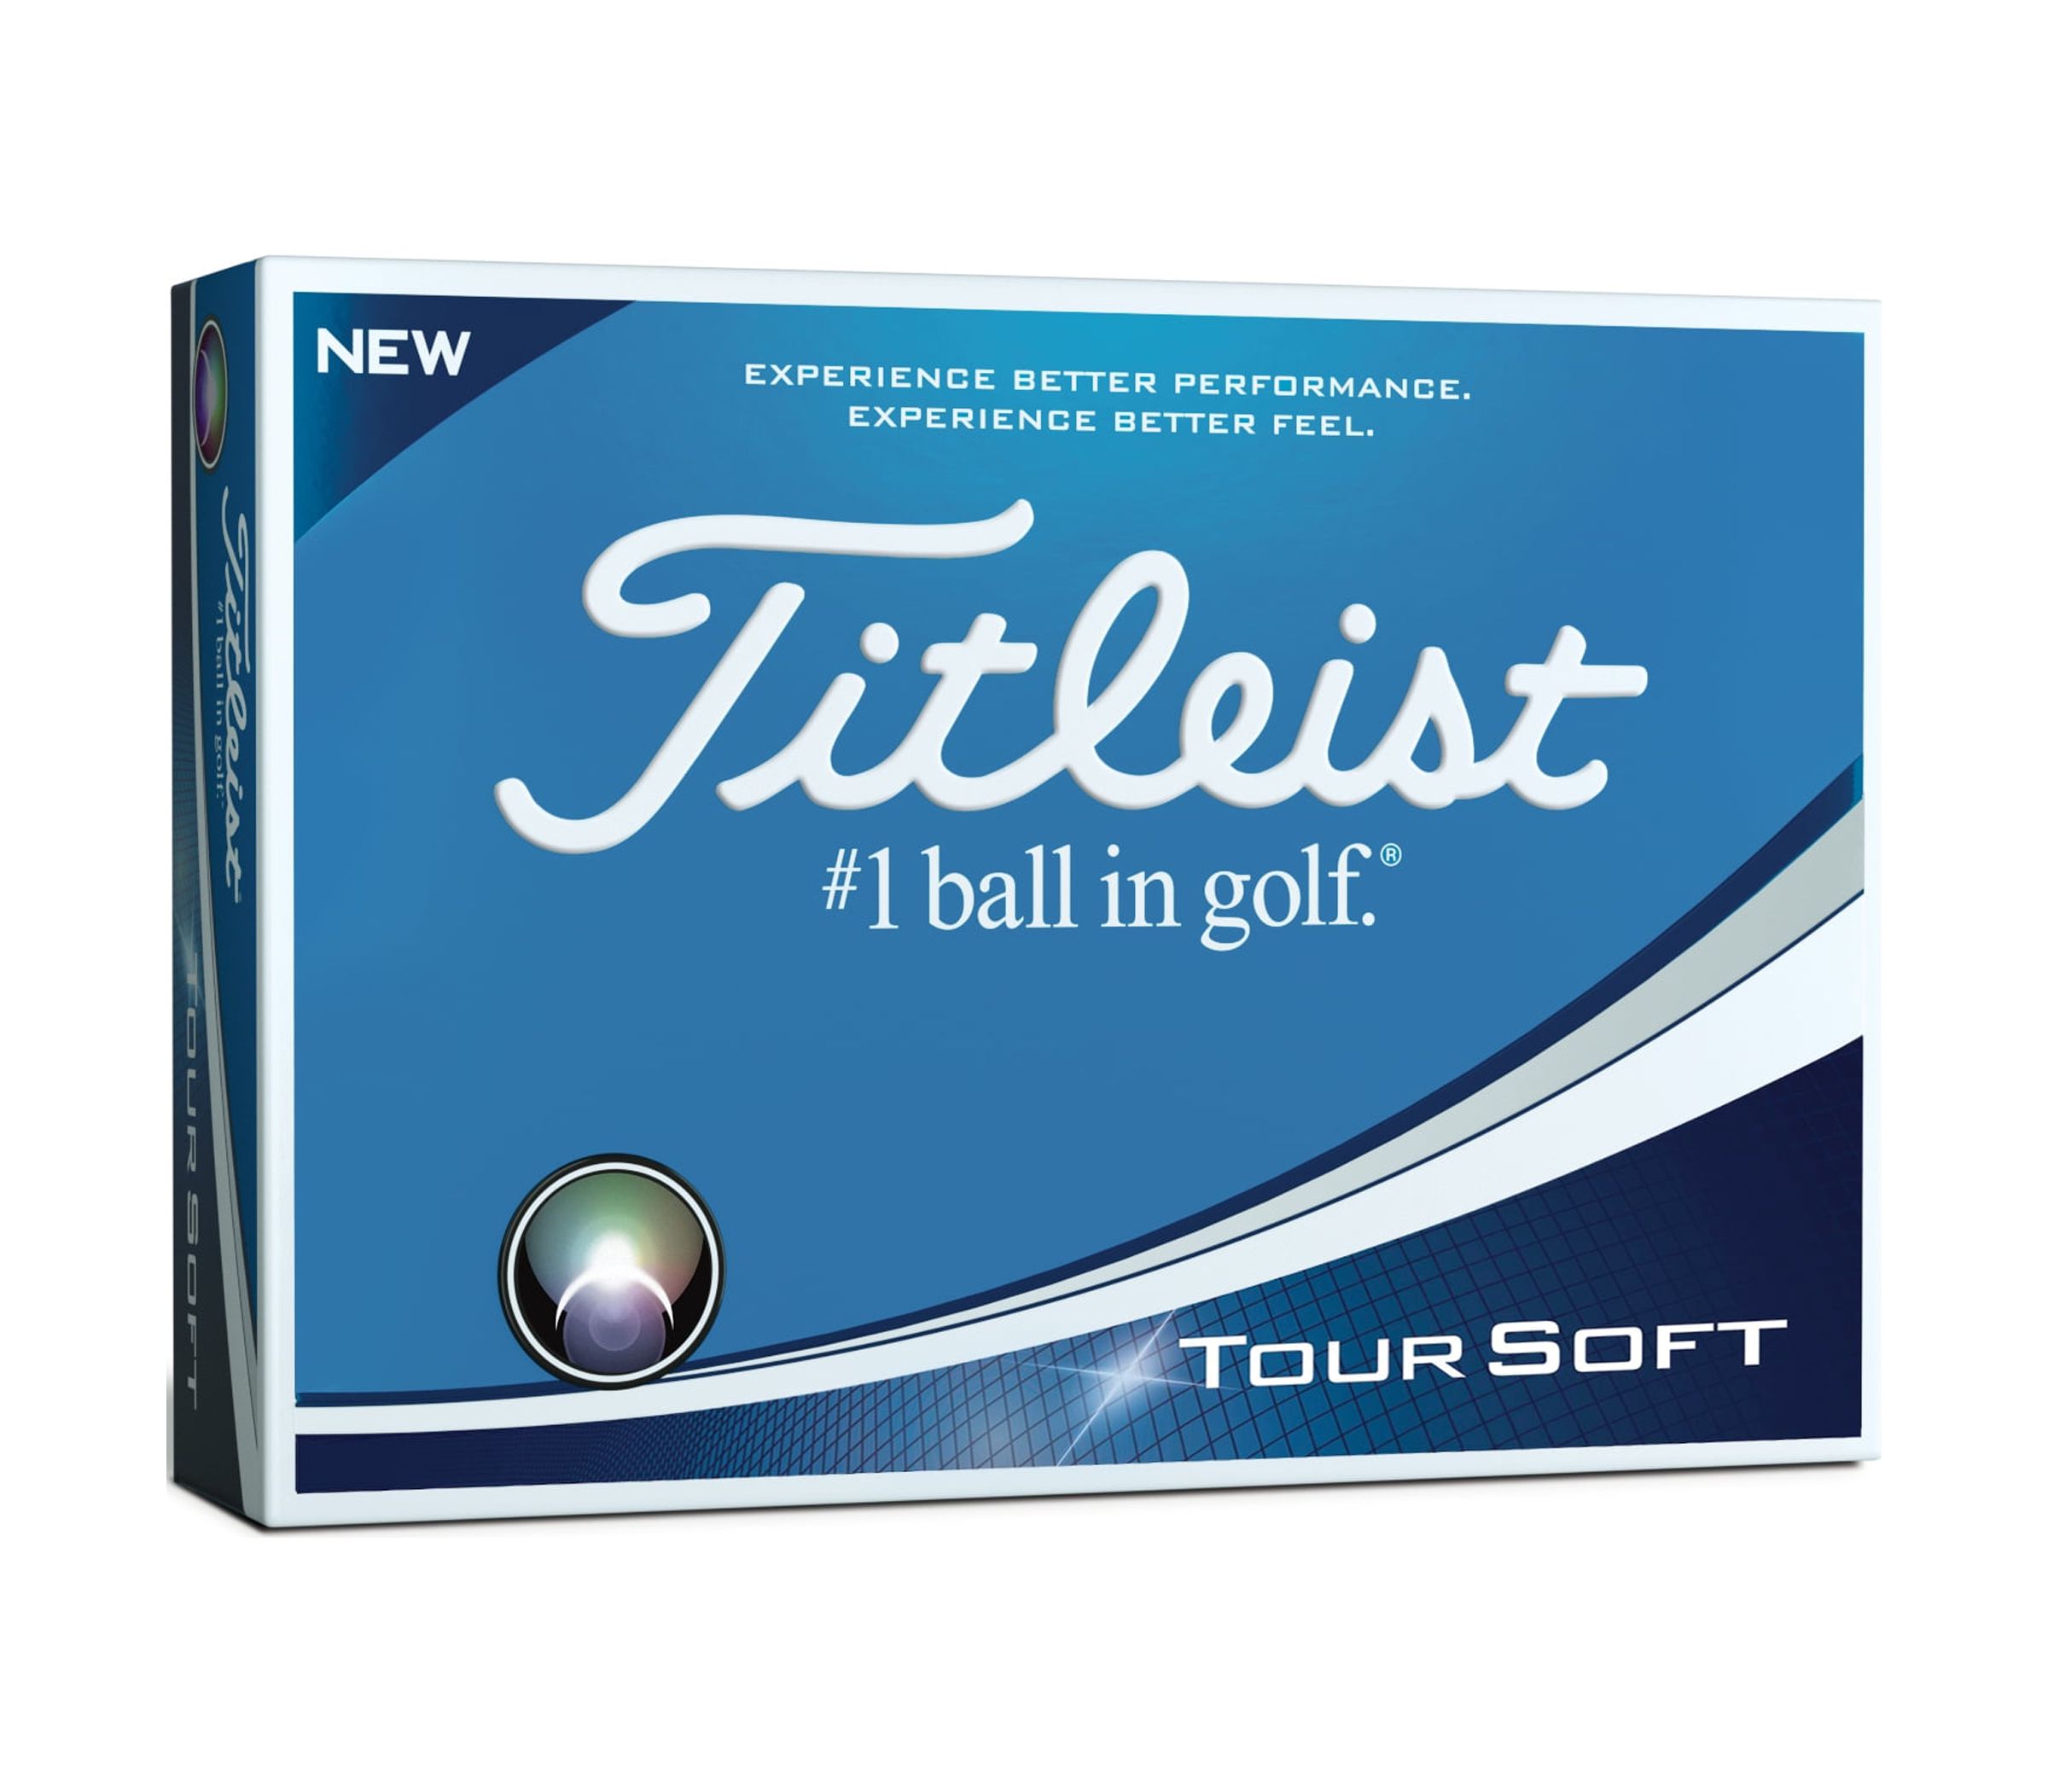 Titlelist Tour Soft Golf Balls, 12 Pack - image 1 of 4